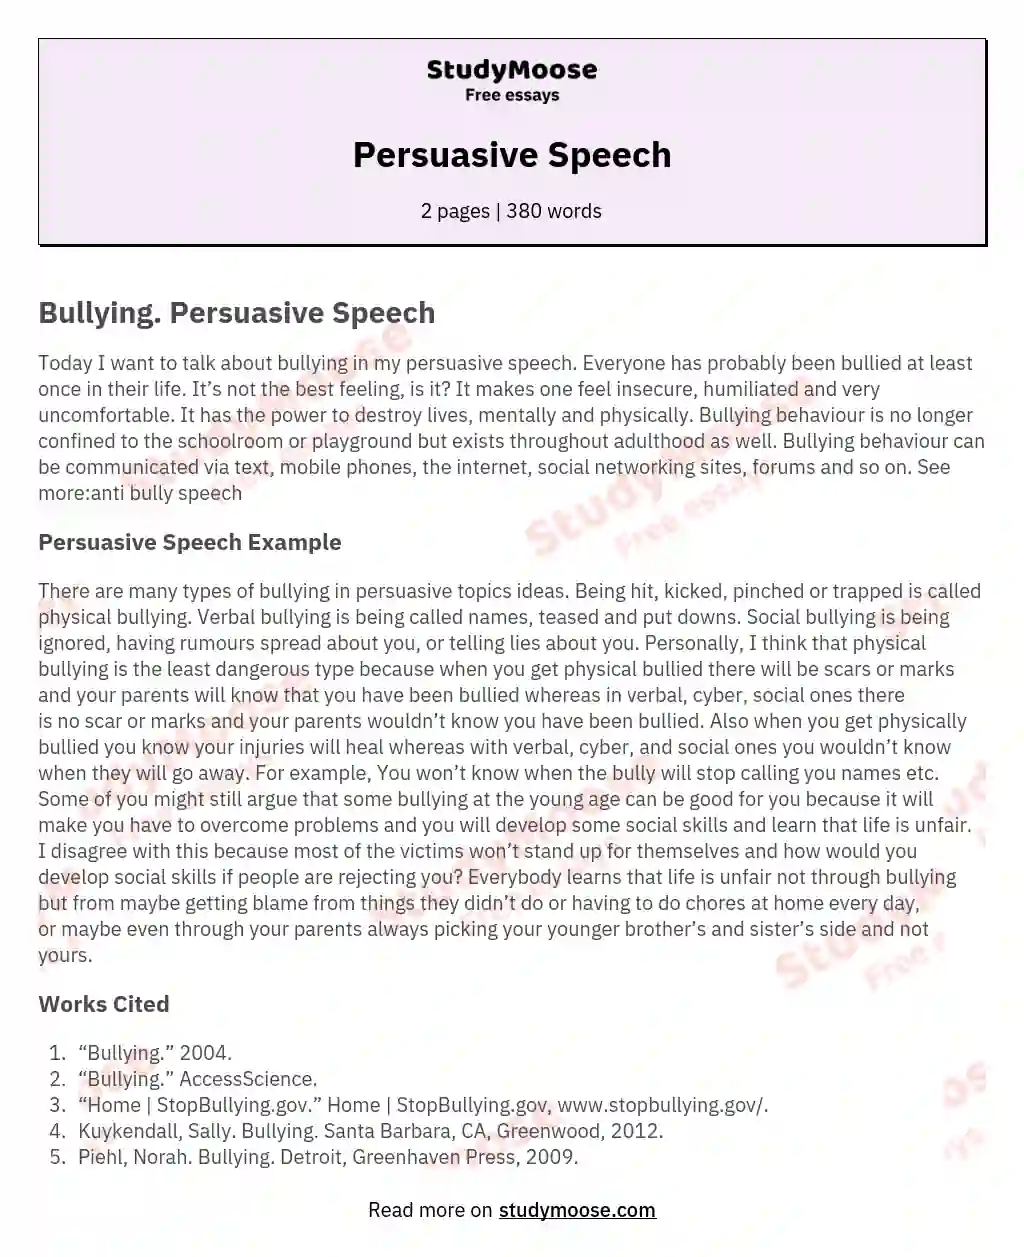 Persuasive Speech essay